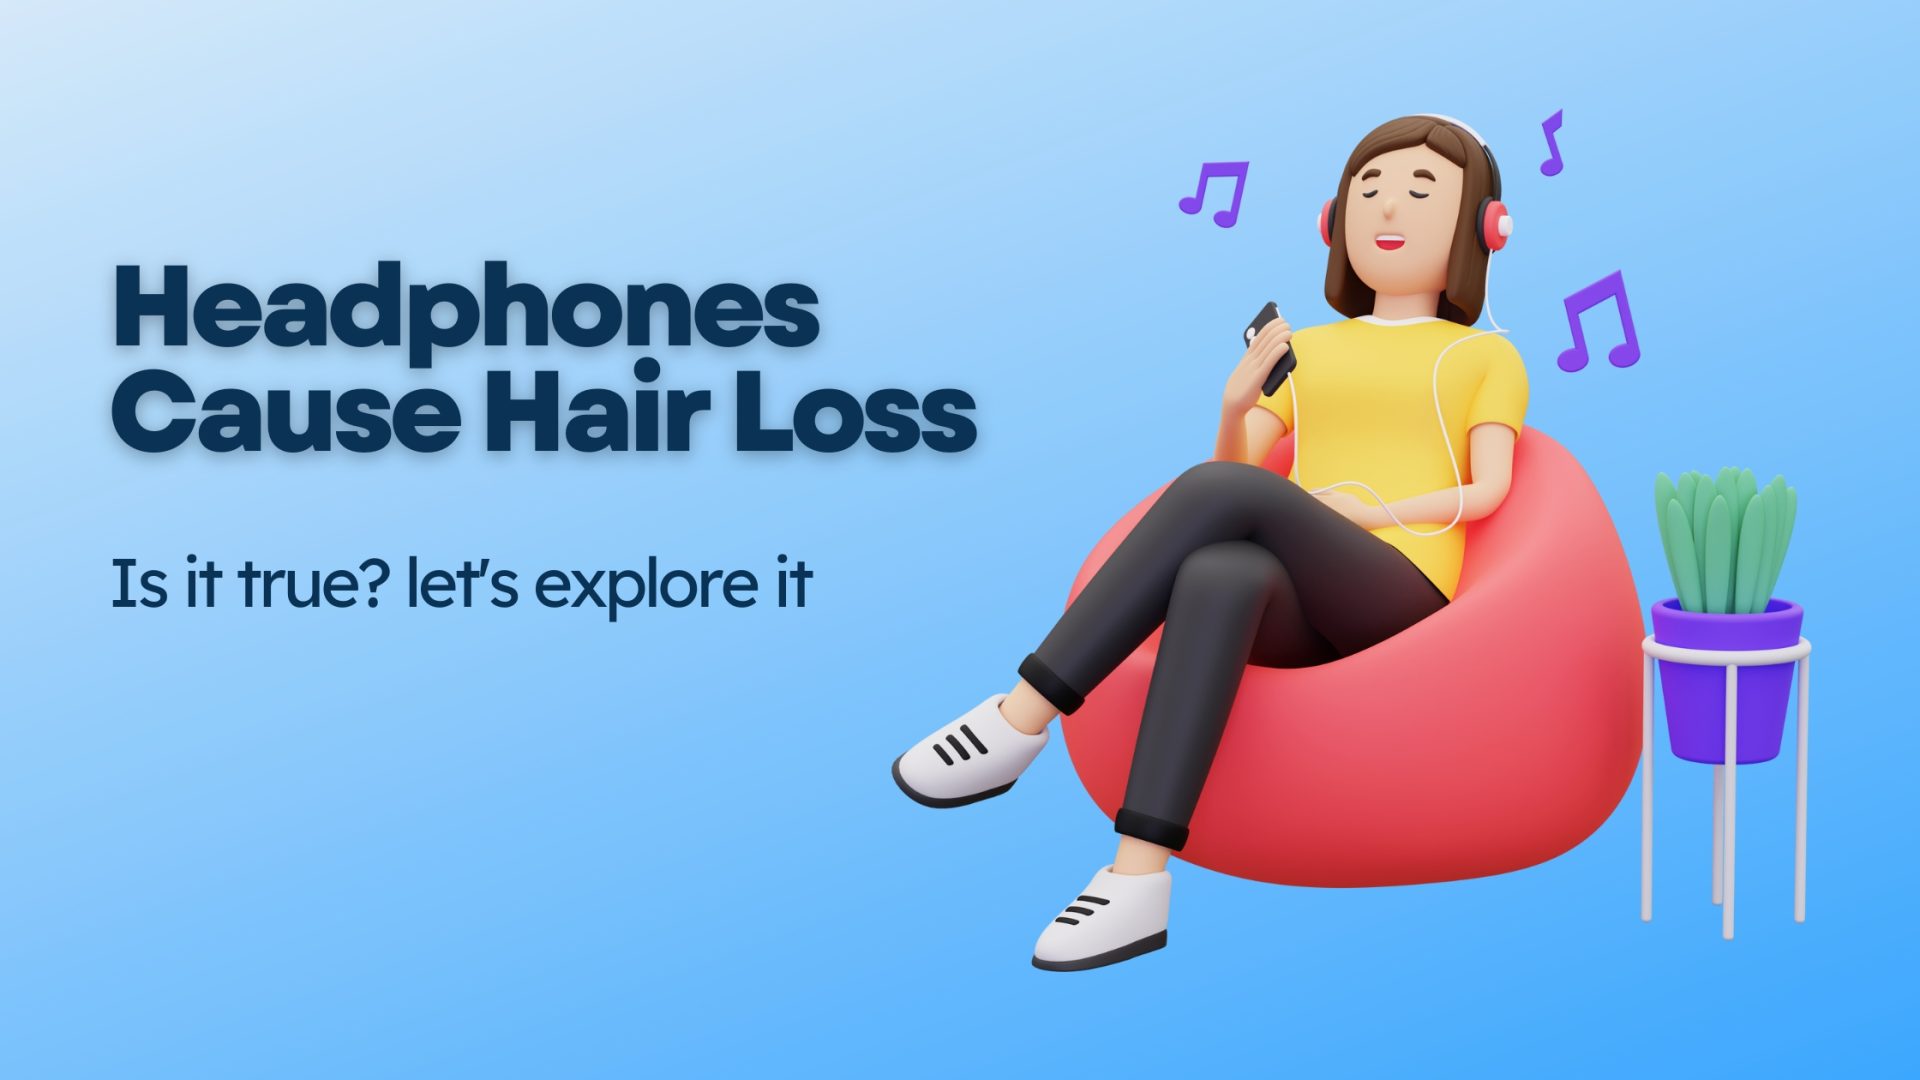 Do headphones cause hair loss